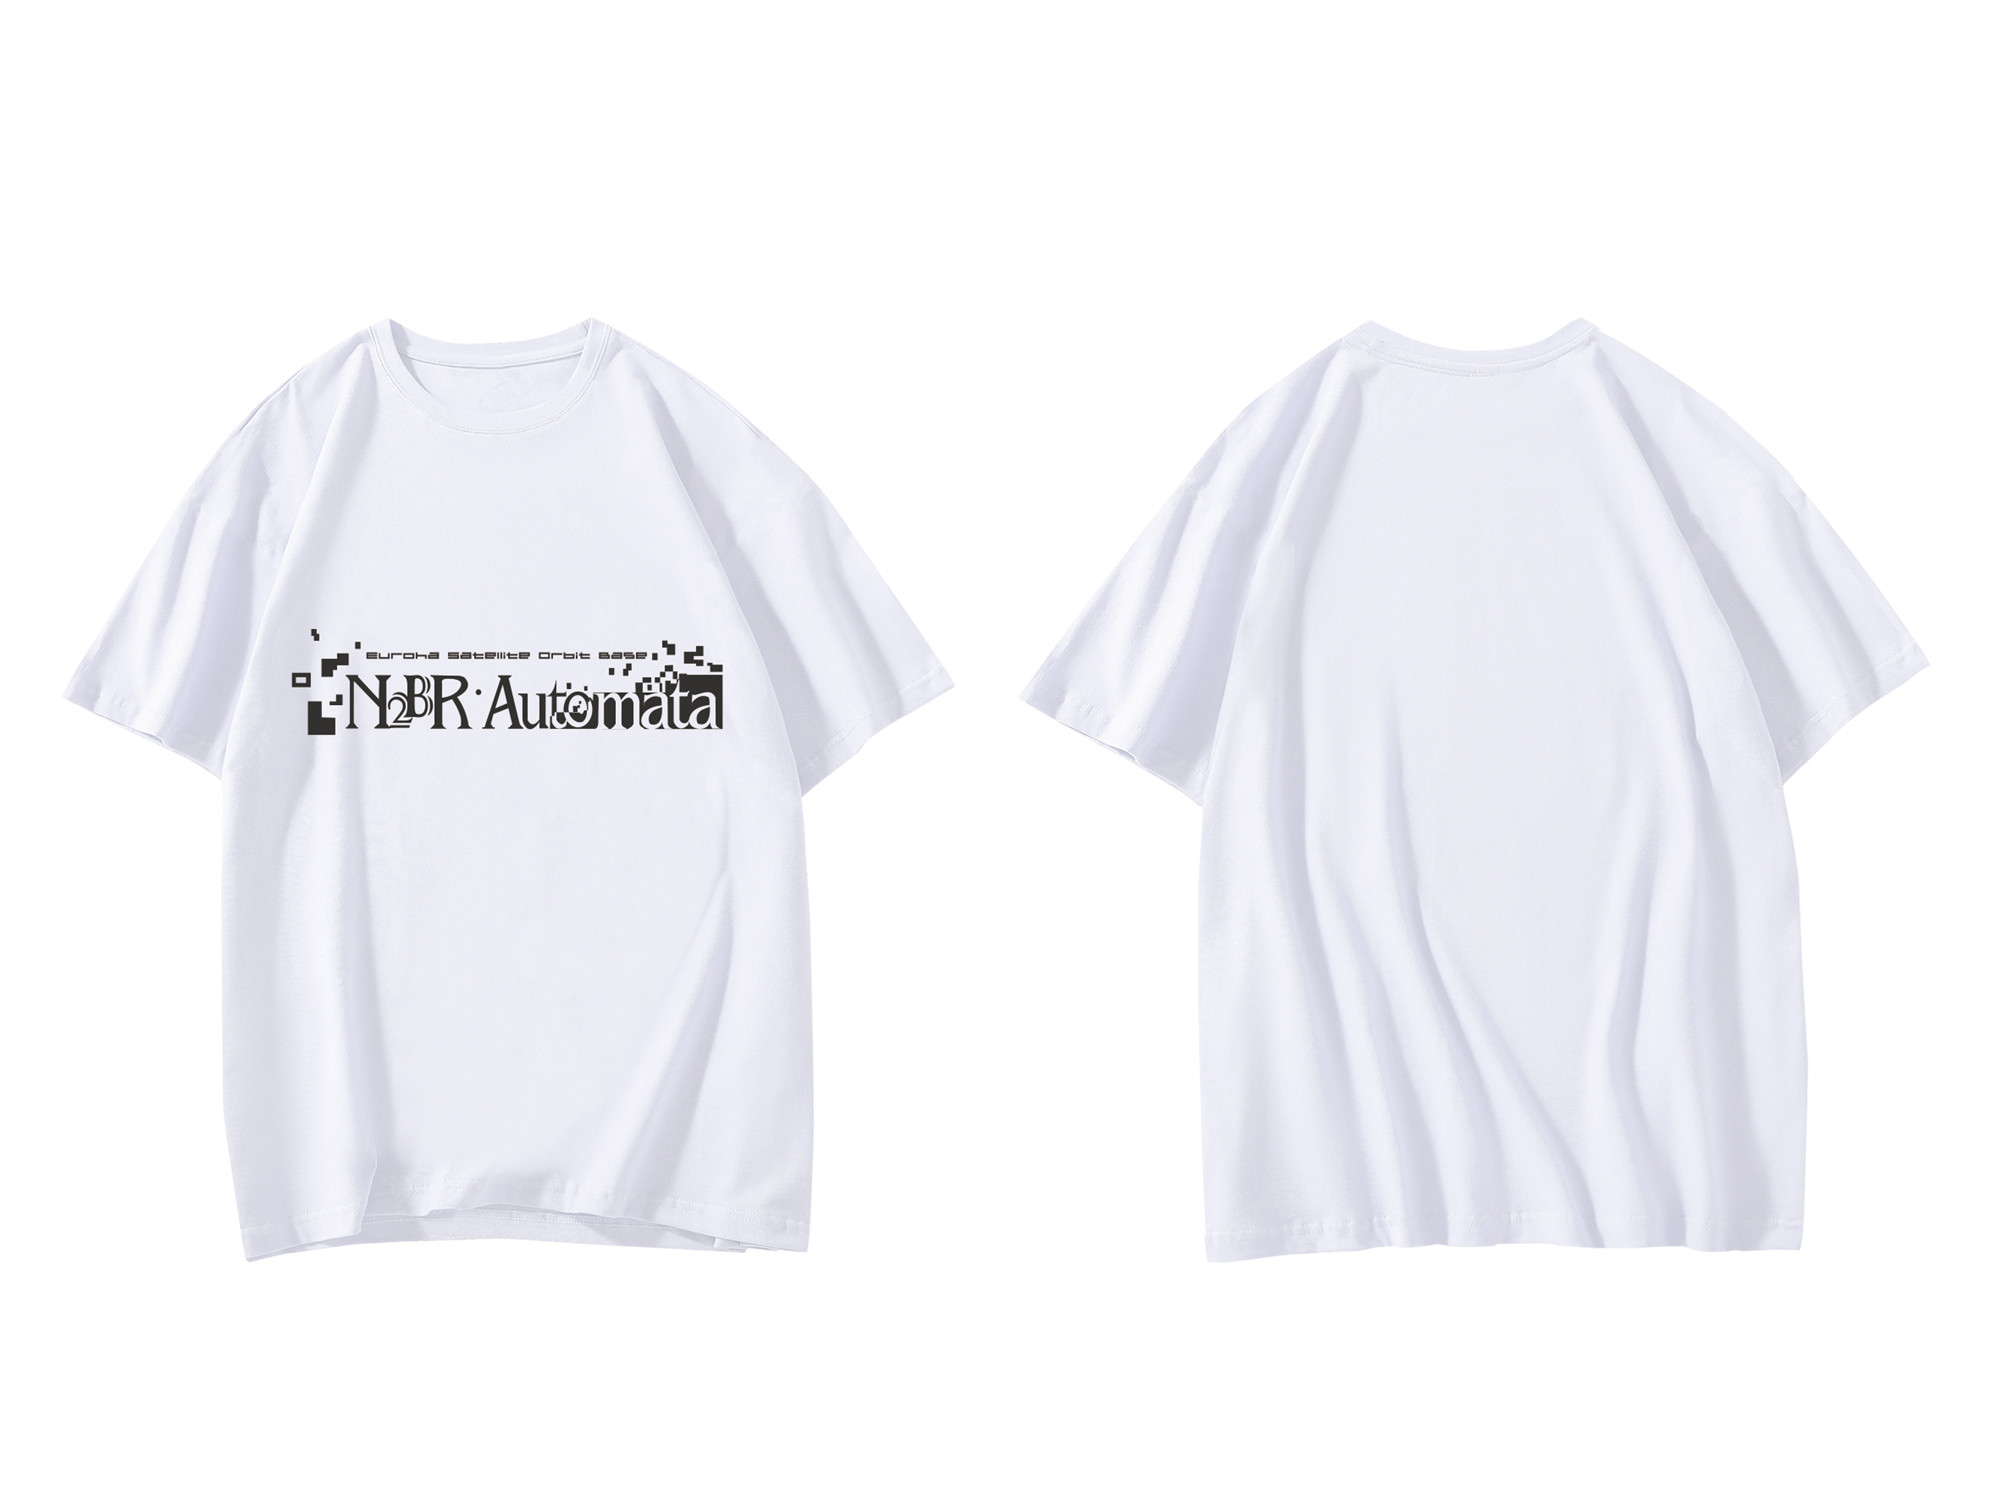 Nier Automata Unisex Anime Mens/Womens Short Sleeve T-shirts Fashion Printed Tops Cosplay Costume